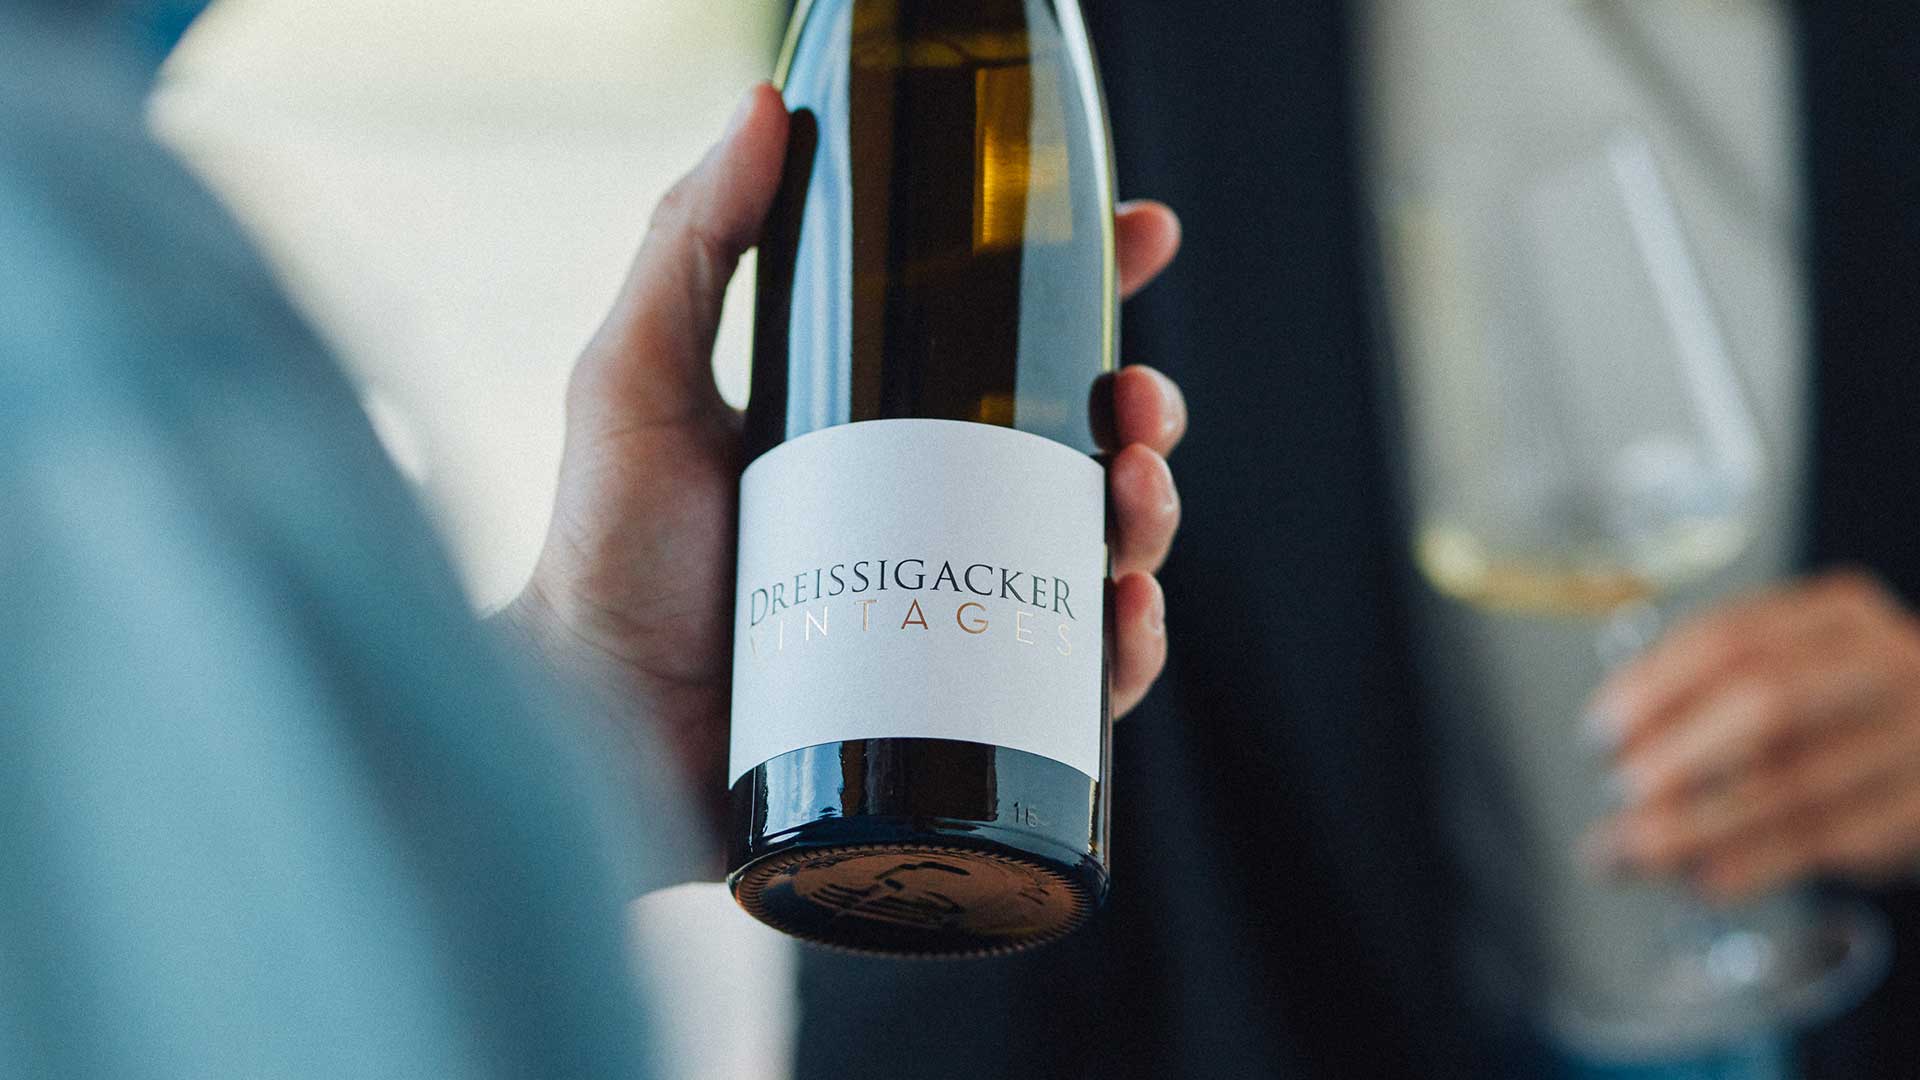 Dreissigacker, Germany - Wine Tasting Evening - Monday 17th July - Stockbridge